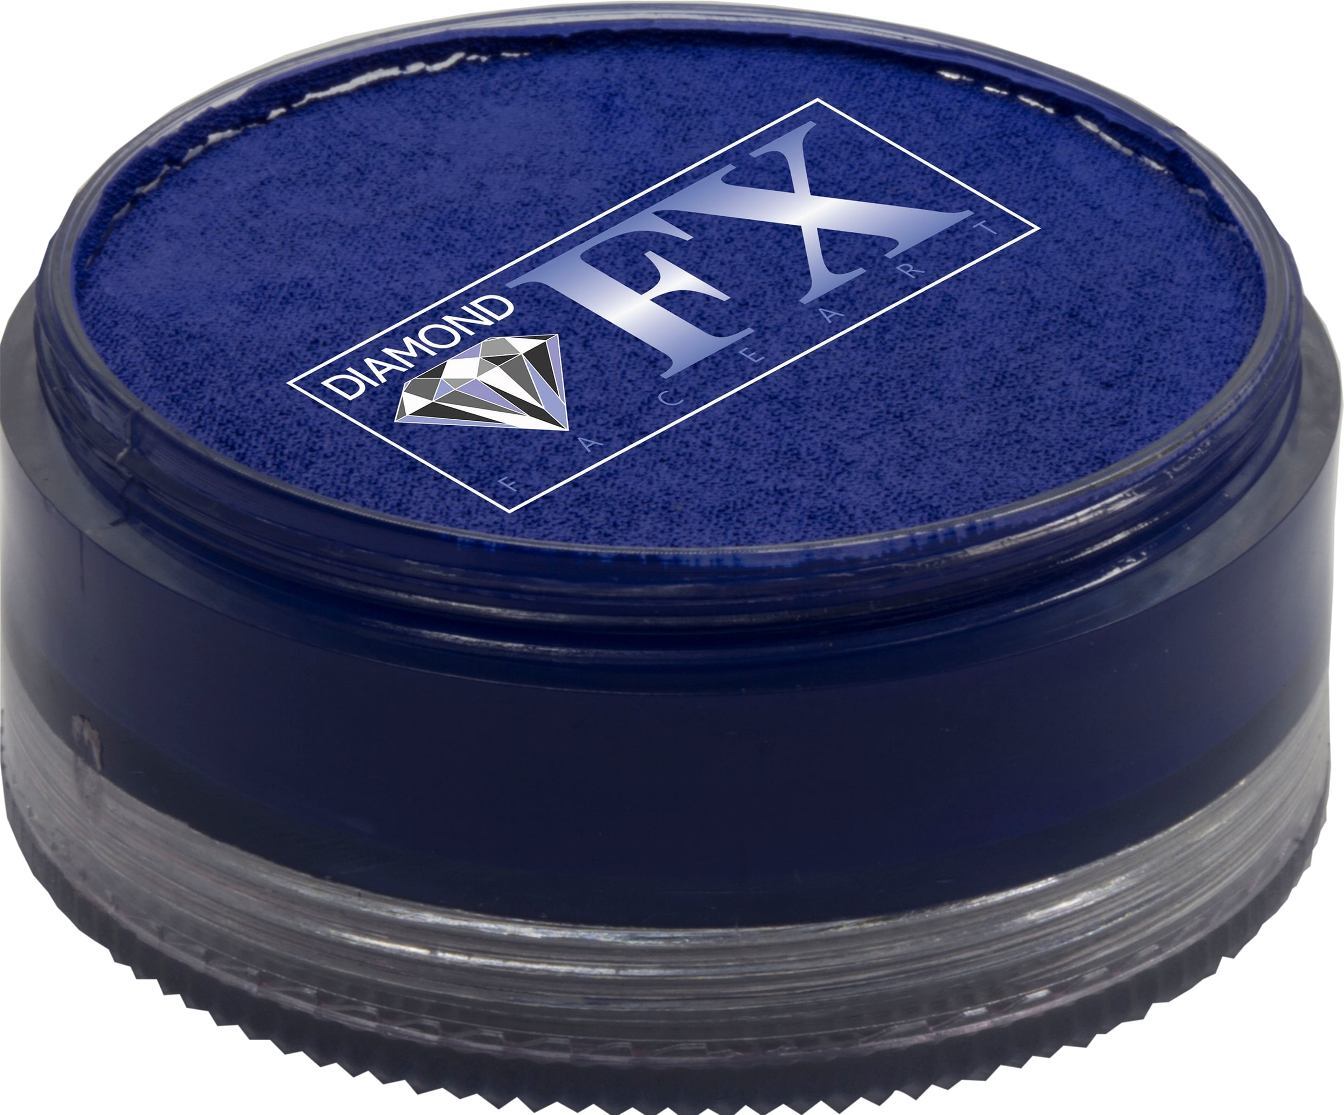 Diamond FX Blue Neon 90g (Cosmetic) - Small Image